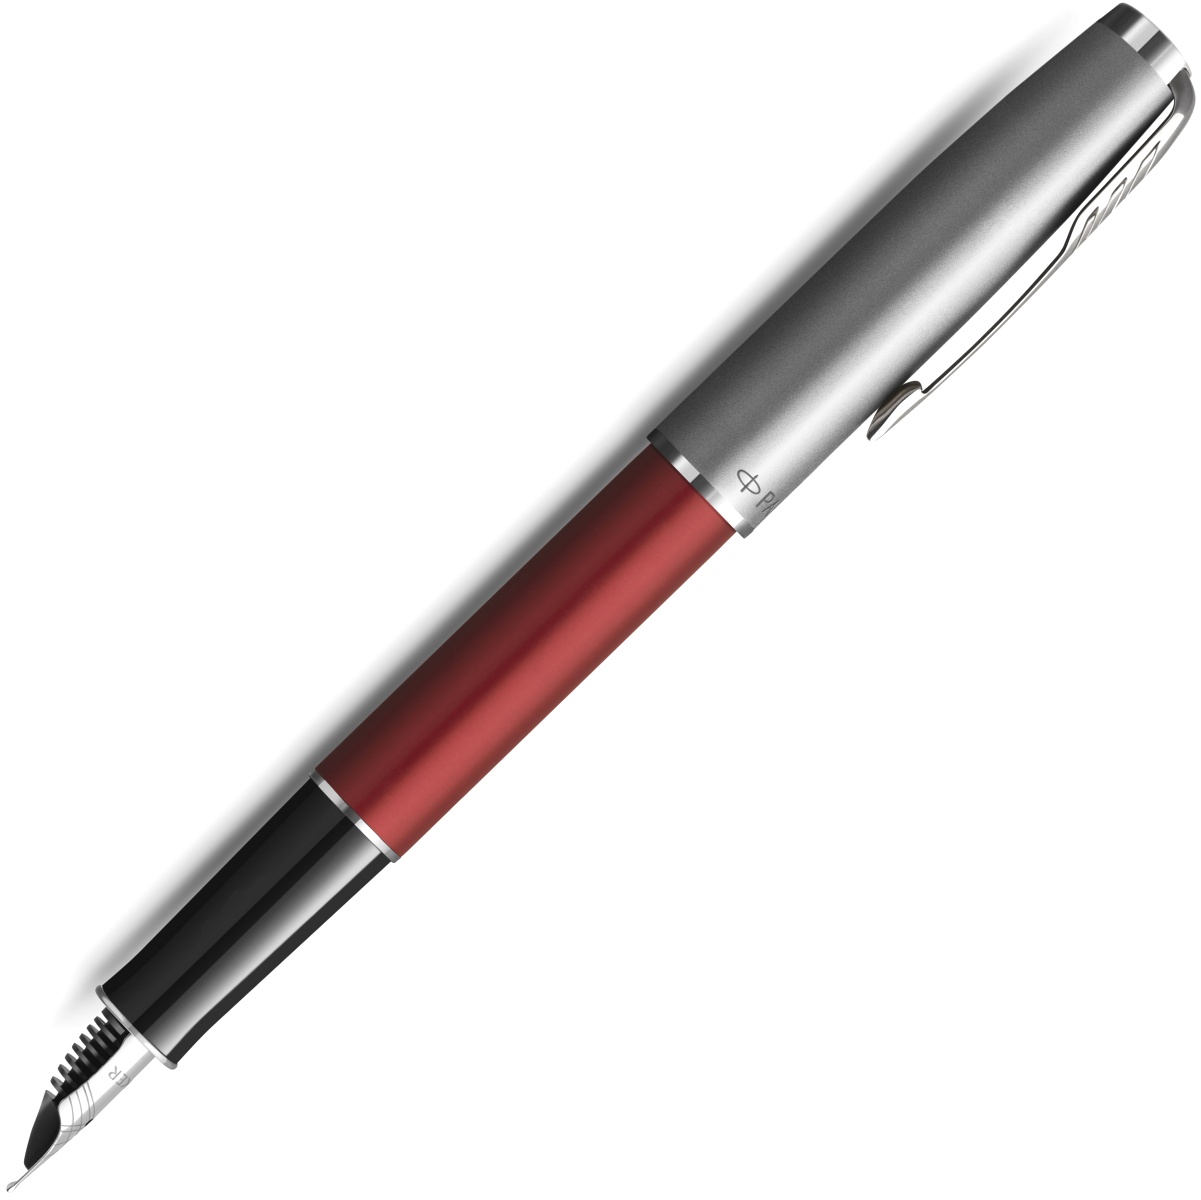  Ручка перьевая Parker Sonnet F546, Red CT (Перо F), фото 2